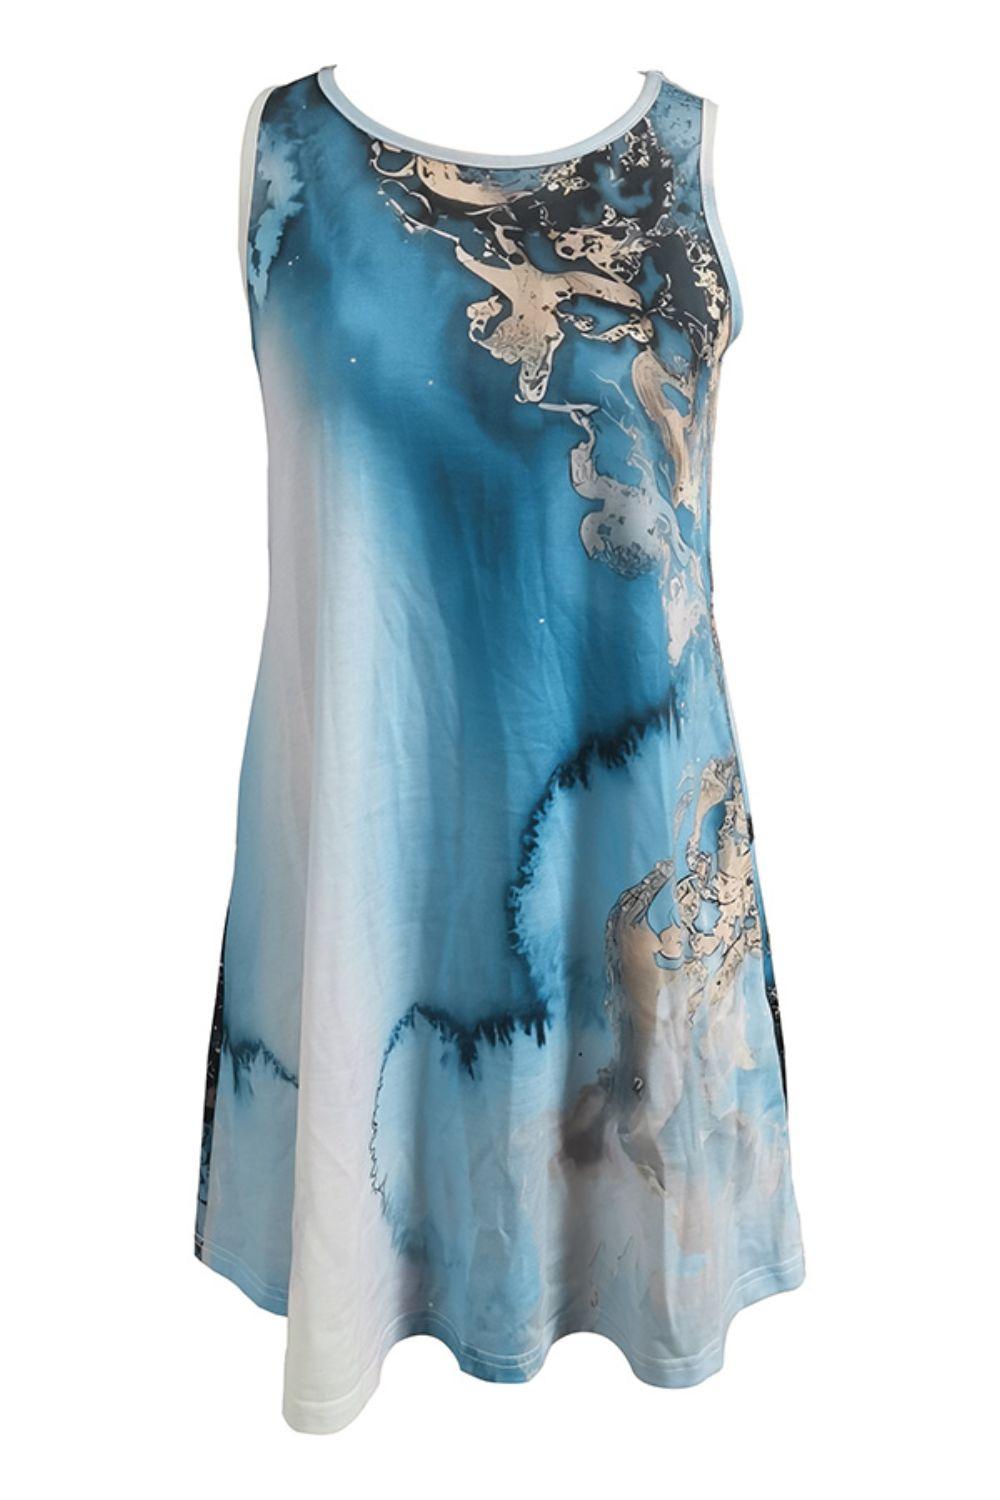 Abstract Print Round Neck Sleeveless Dress with Pockets - BELLATRENDZ